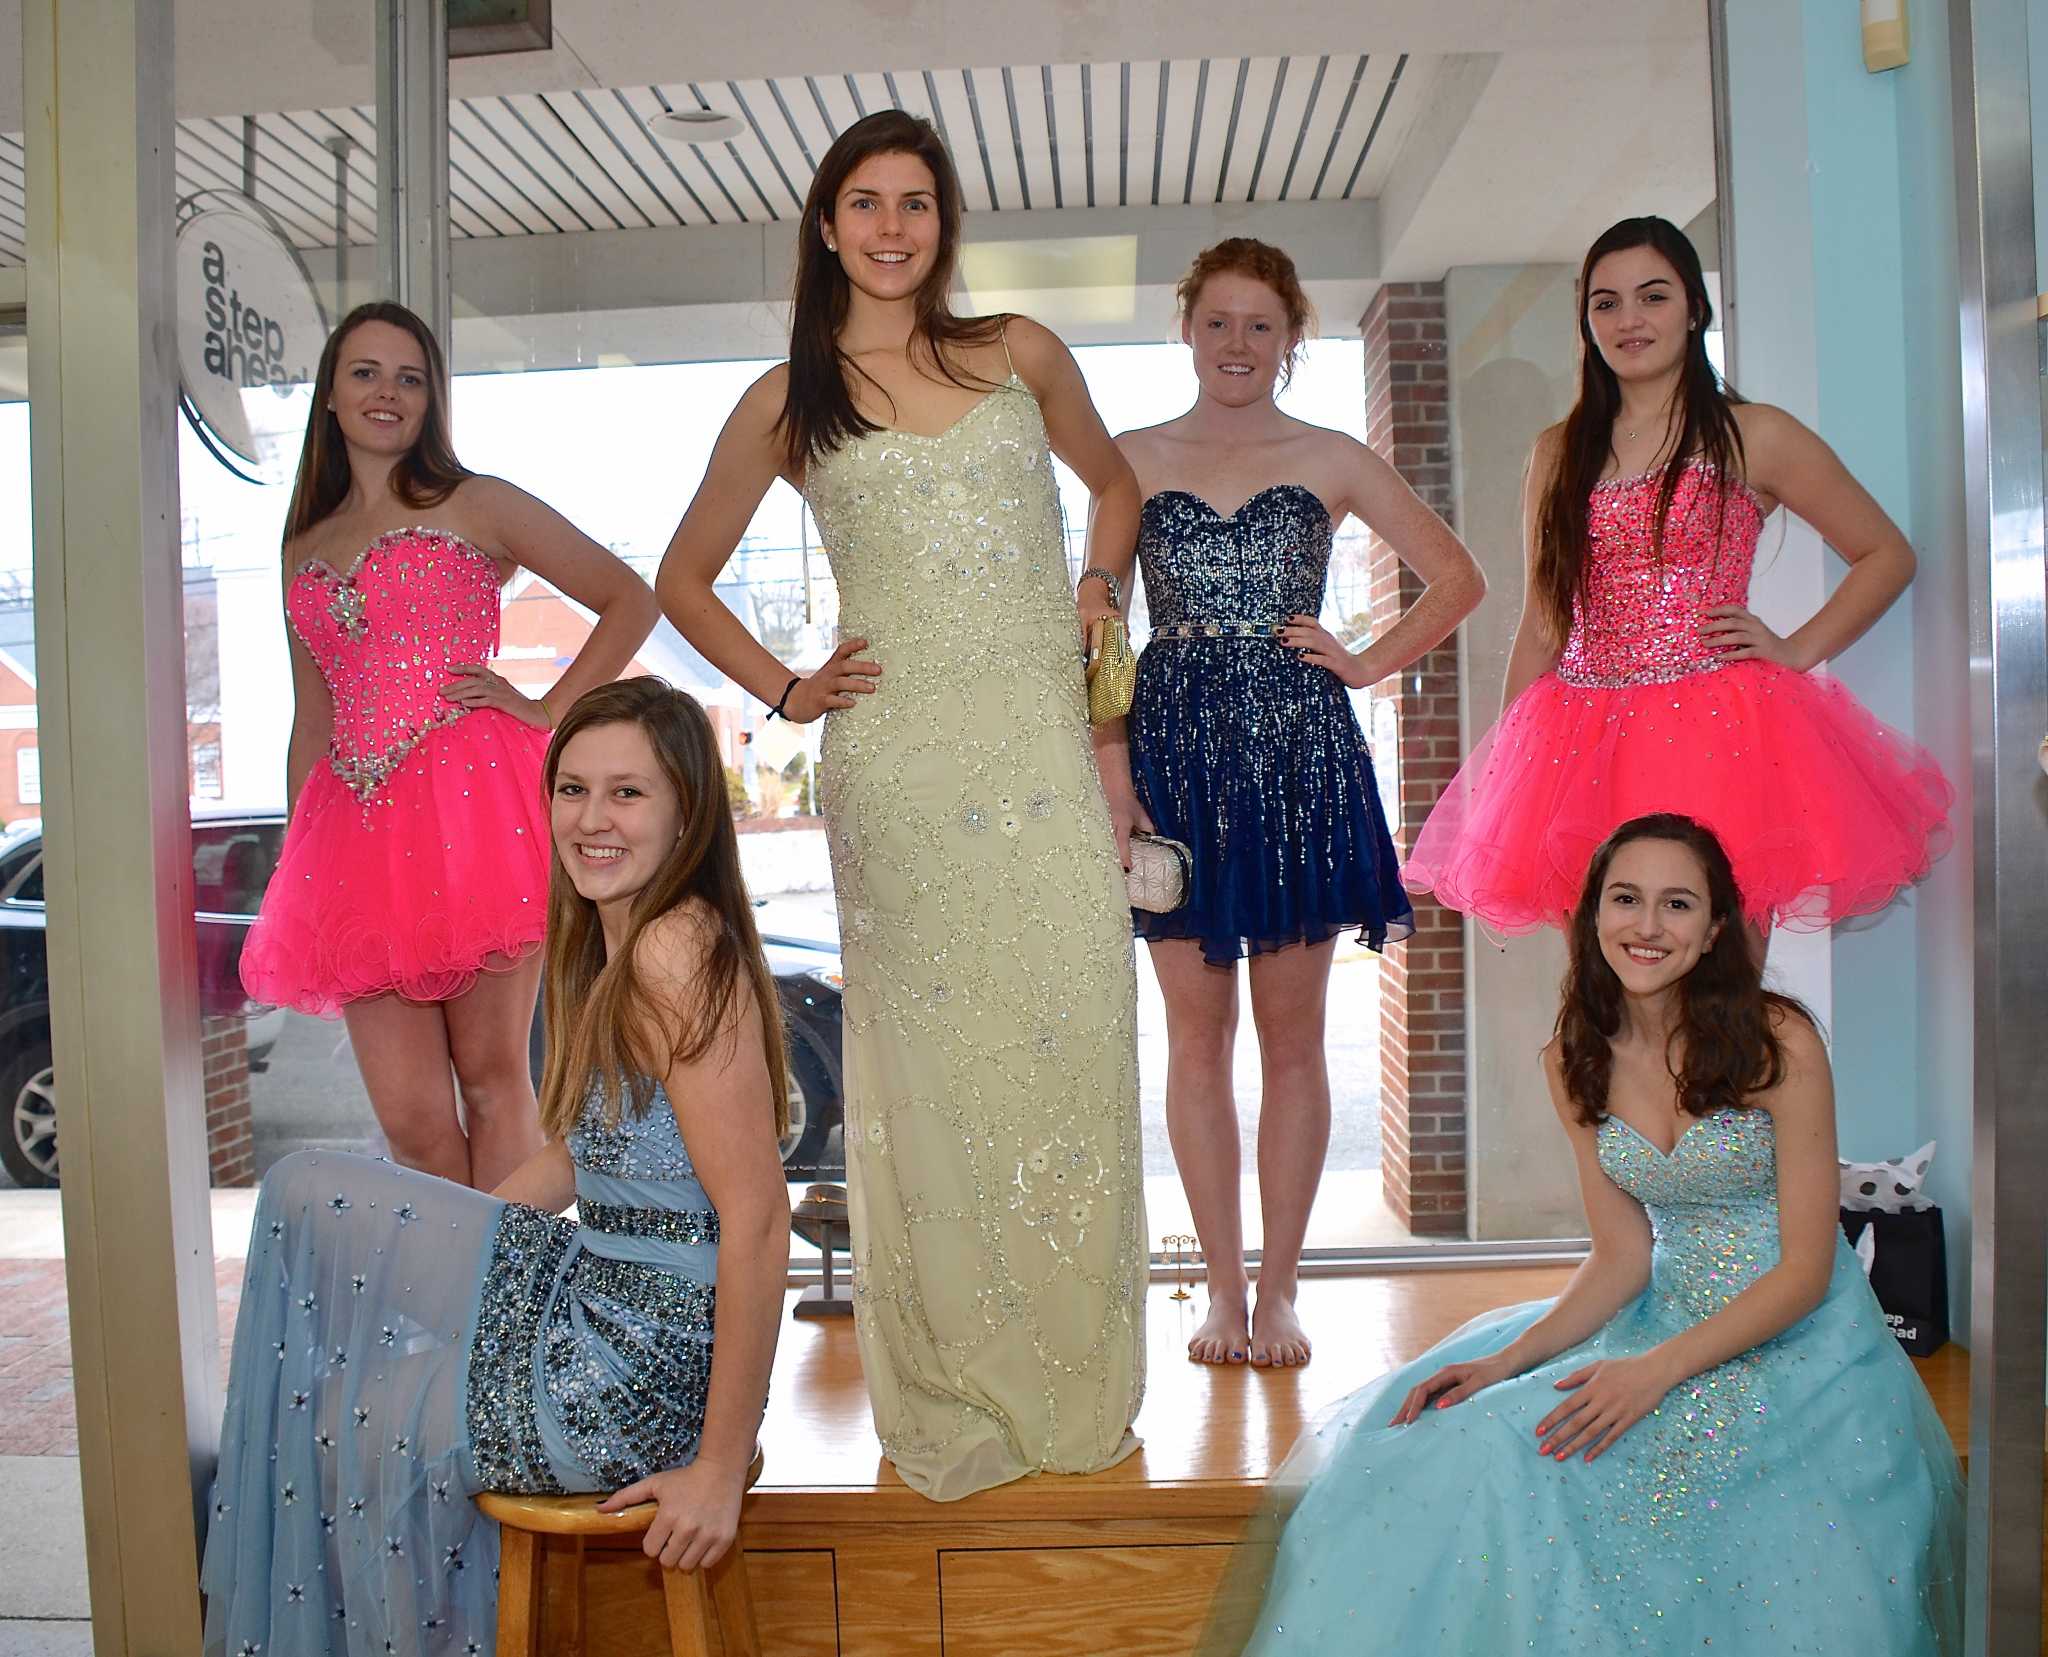 Senior class hosts prom fashion show